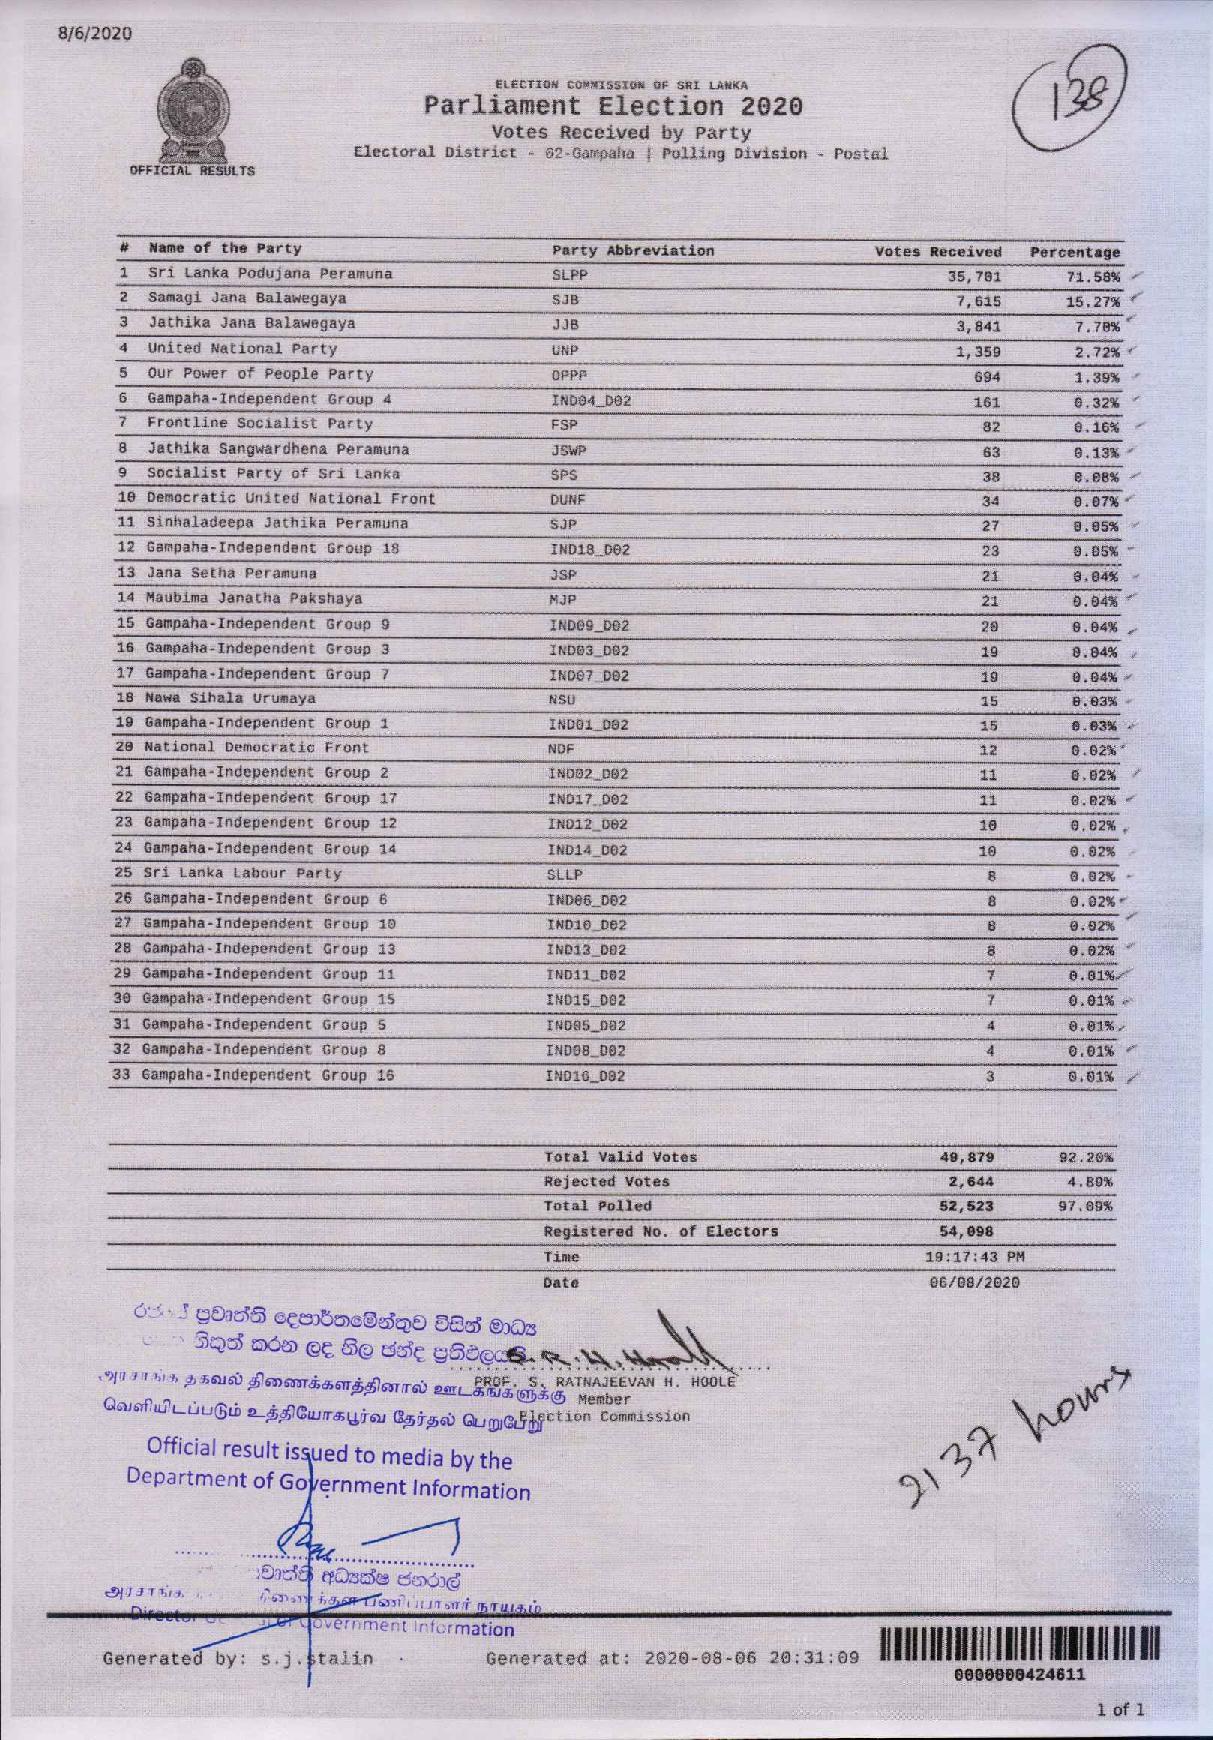 Parliament Election 2020 Gampaha Postal page 001